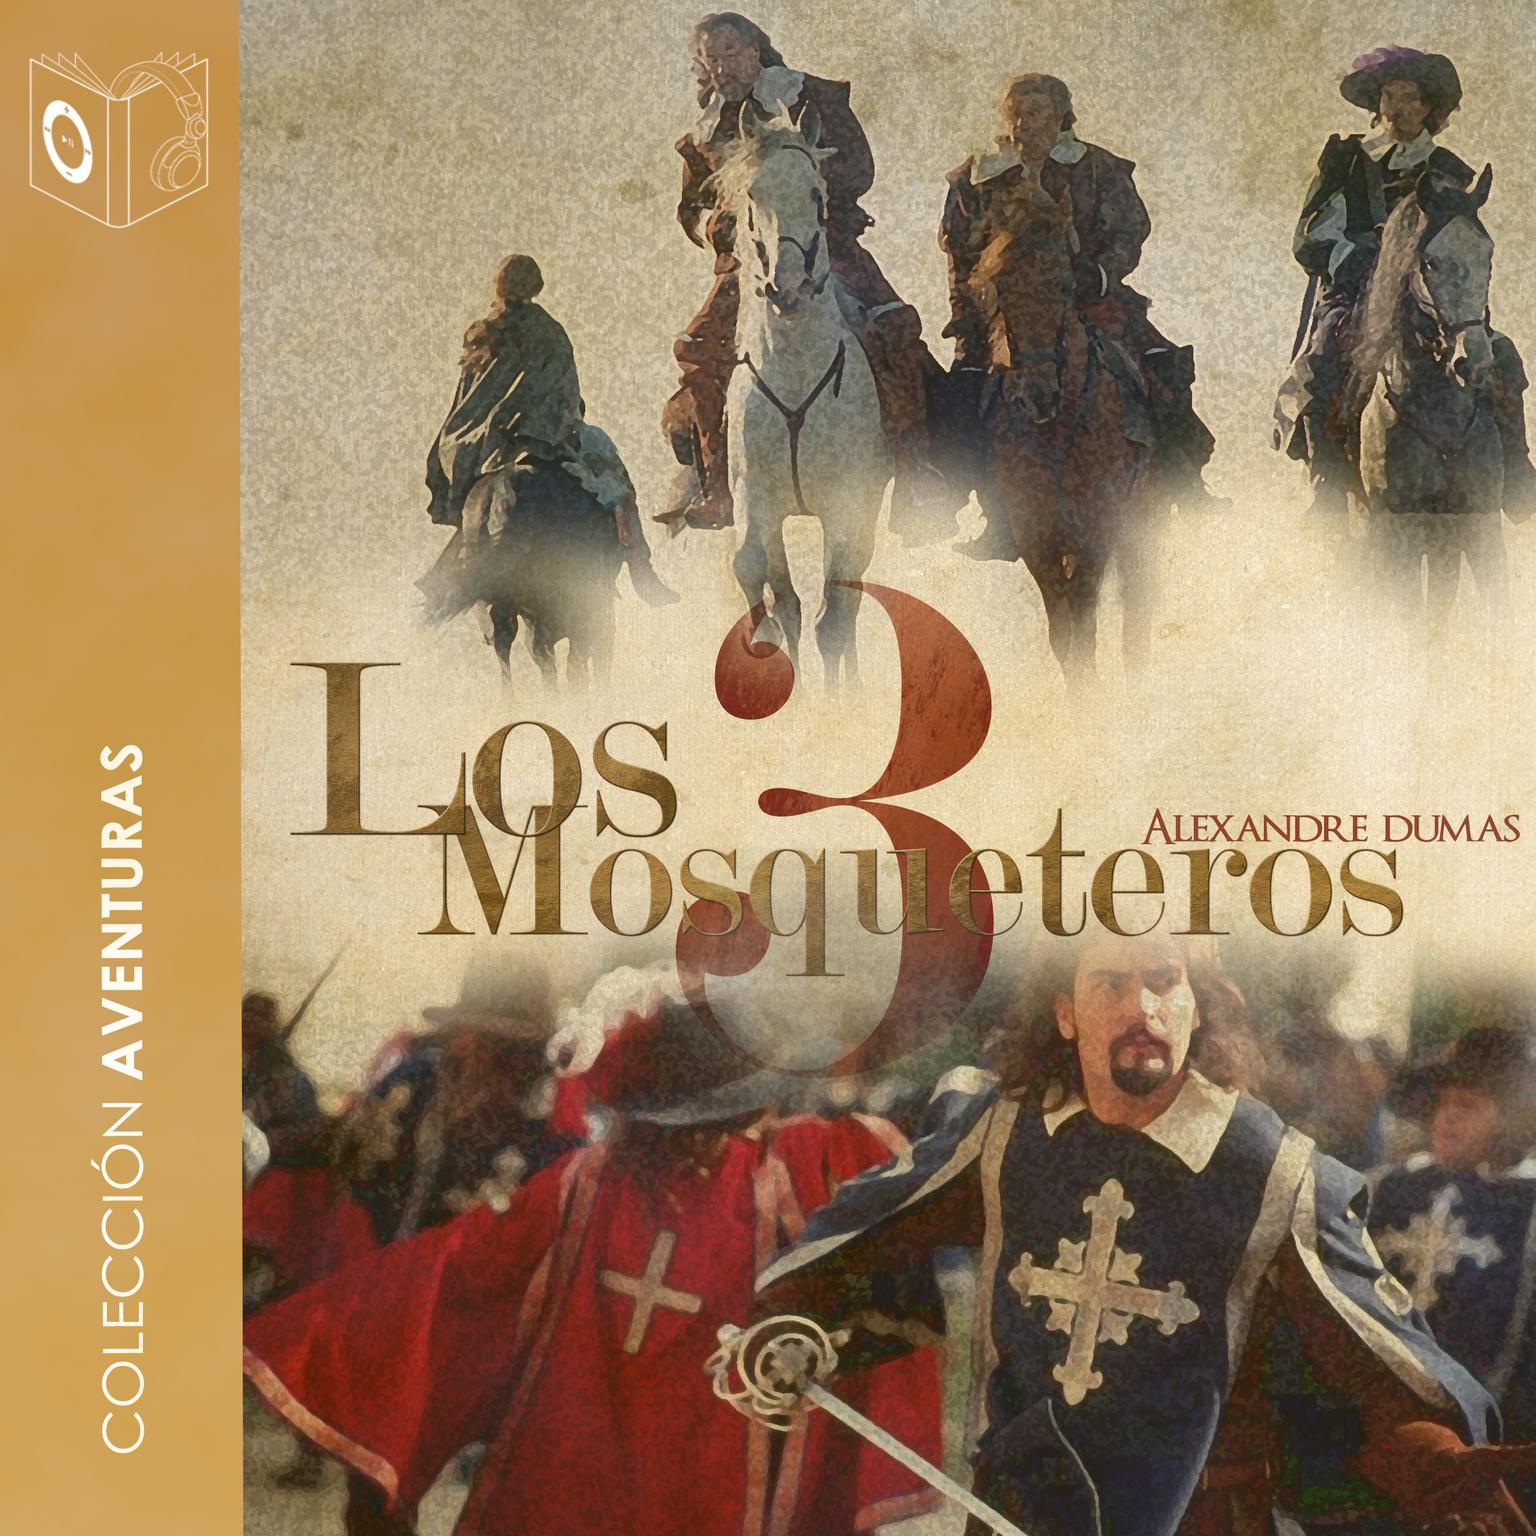 Los 3 mosqueteros Audiobook, by Alexandre Dumas